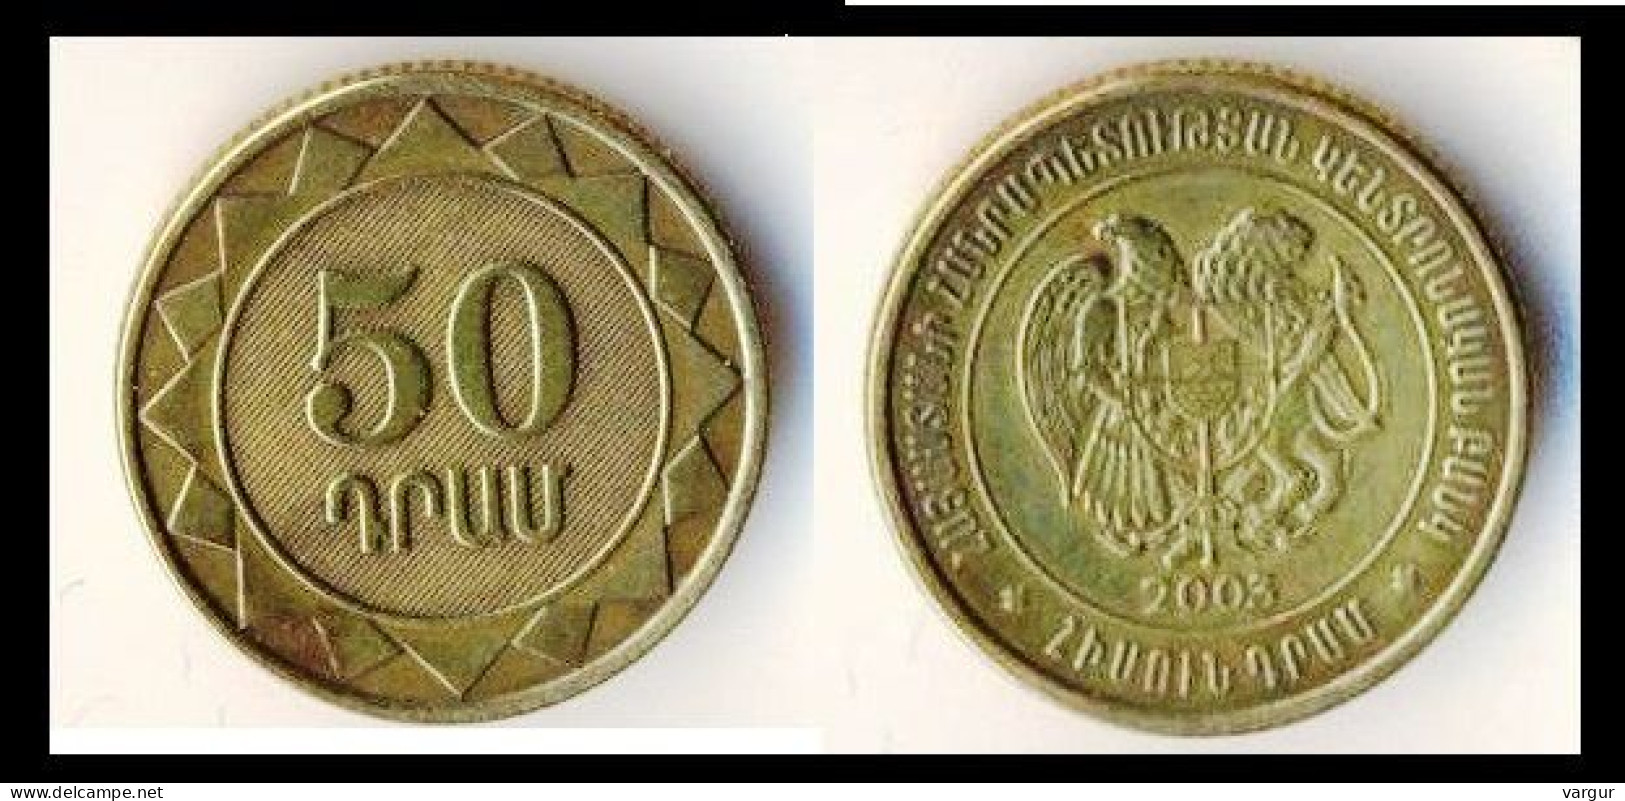 ARMENIA 2003. 50 Dram Coin, VF - Armenia